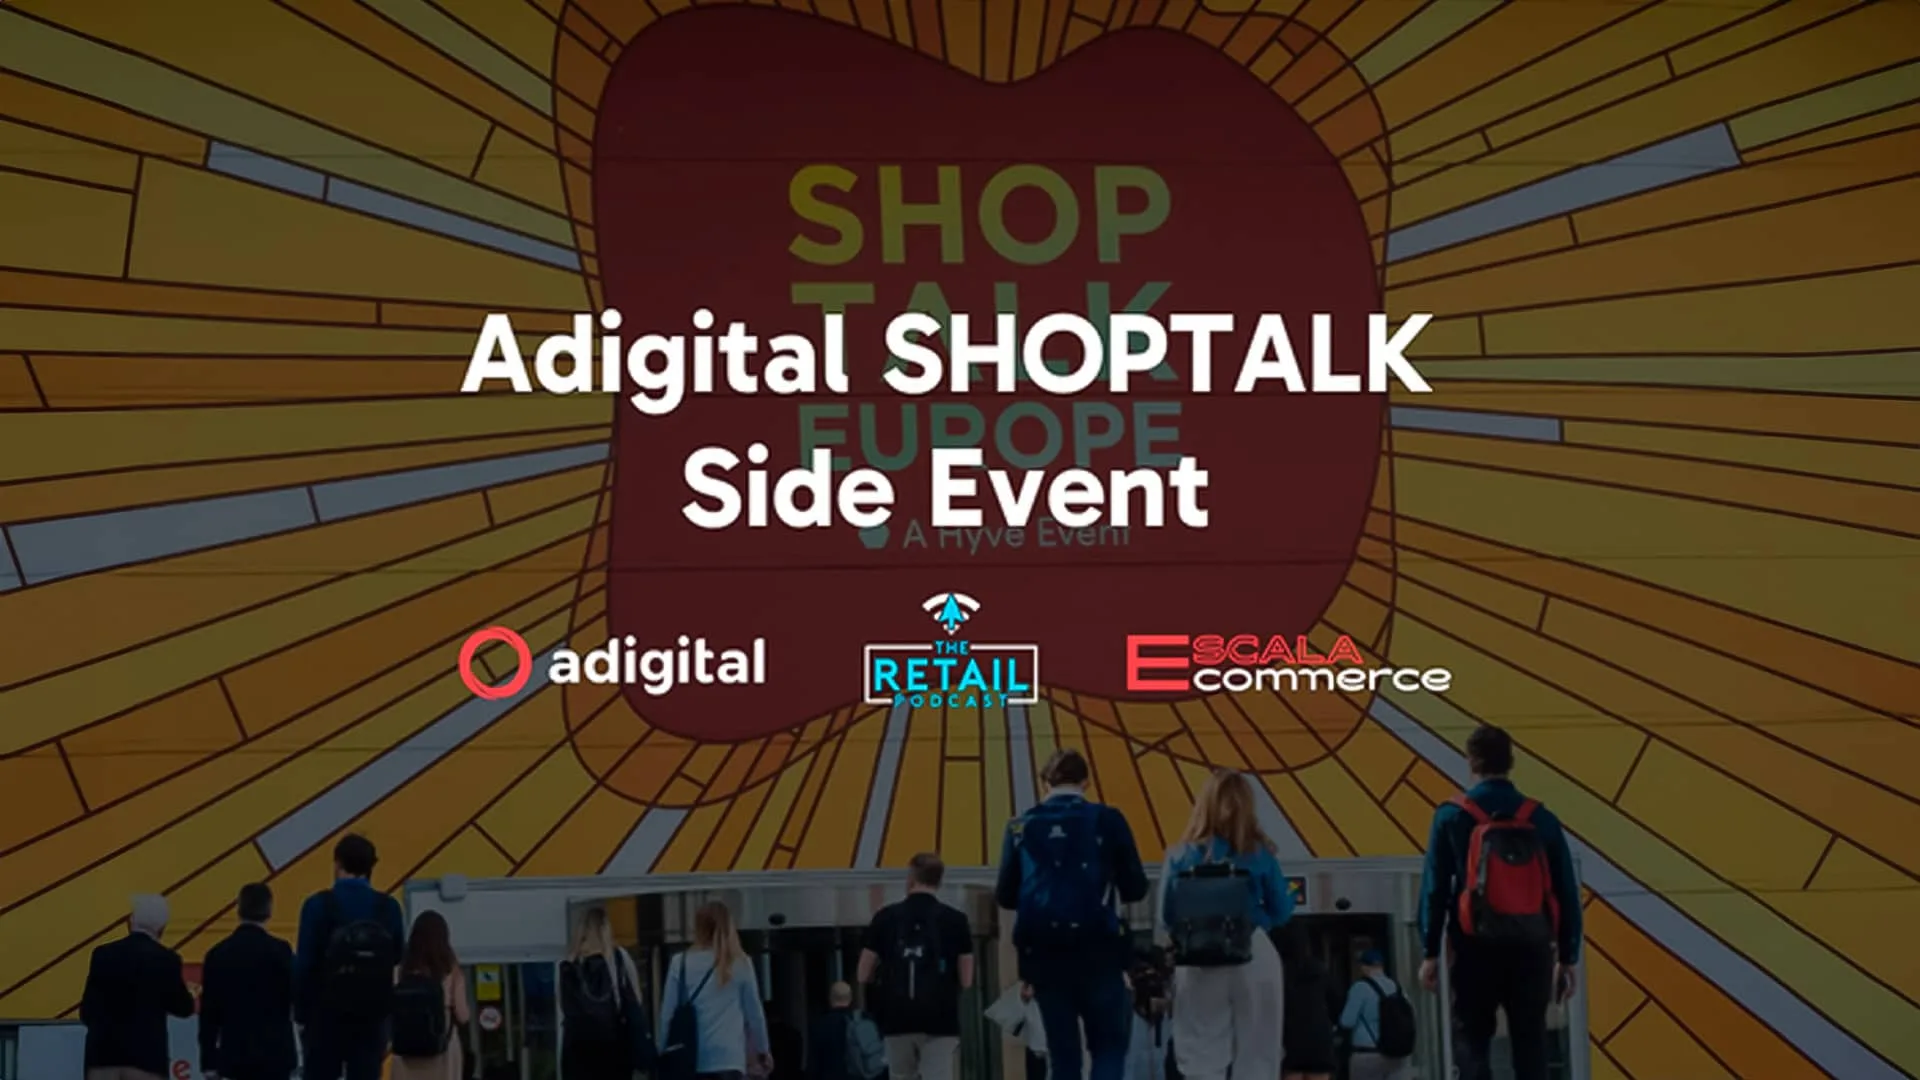 Shoptalk Barcelona - Side Event Adigital